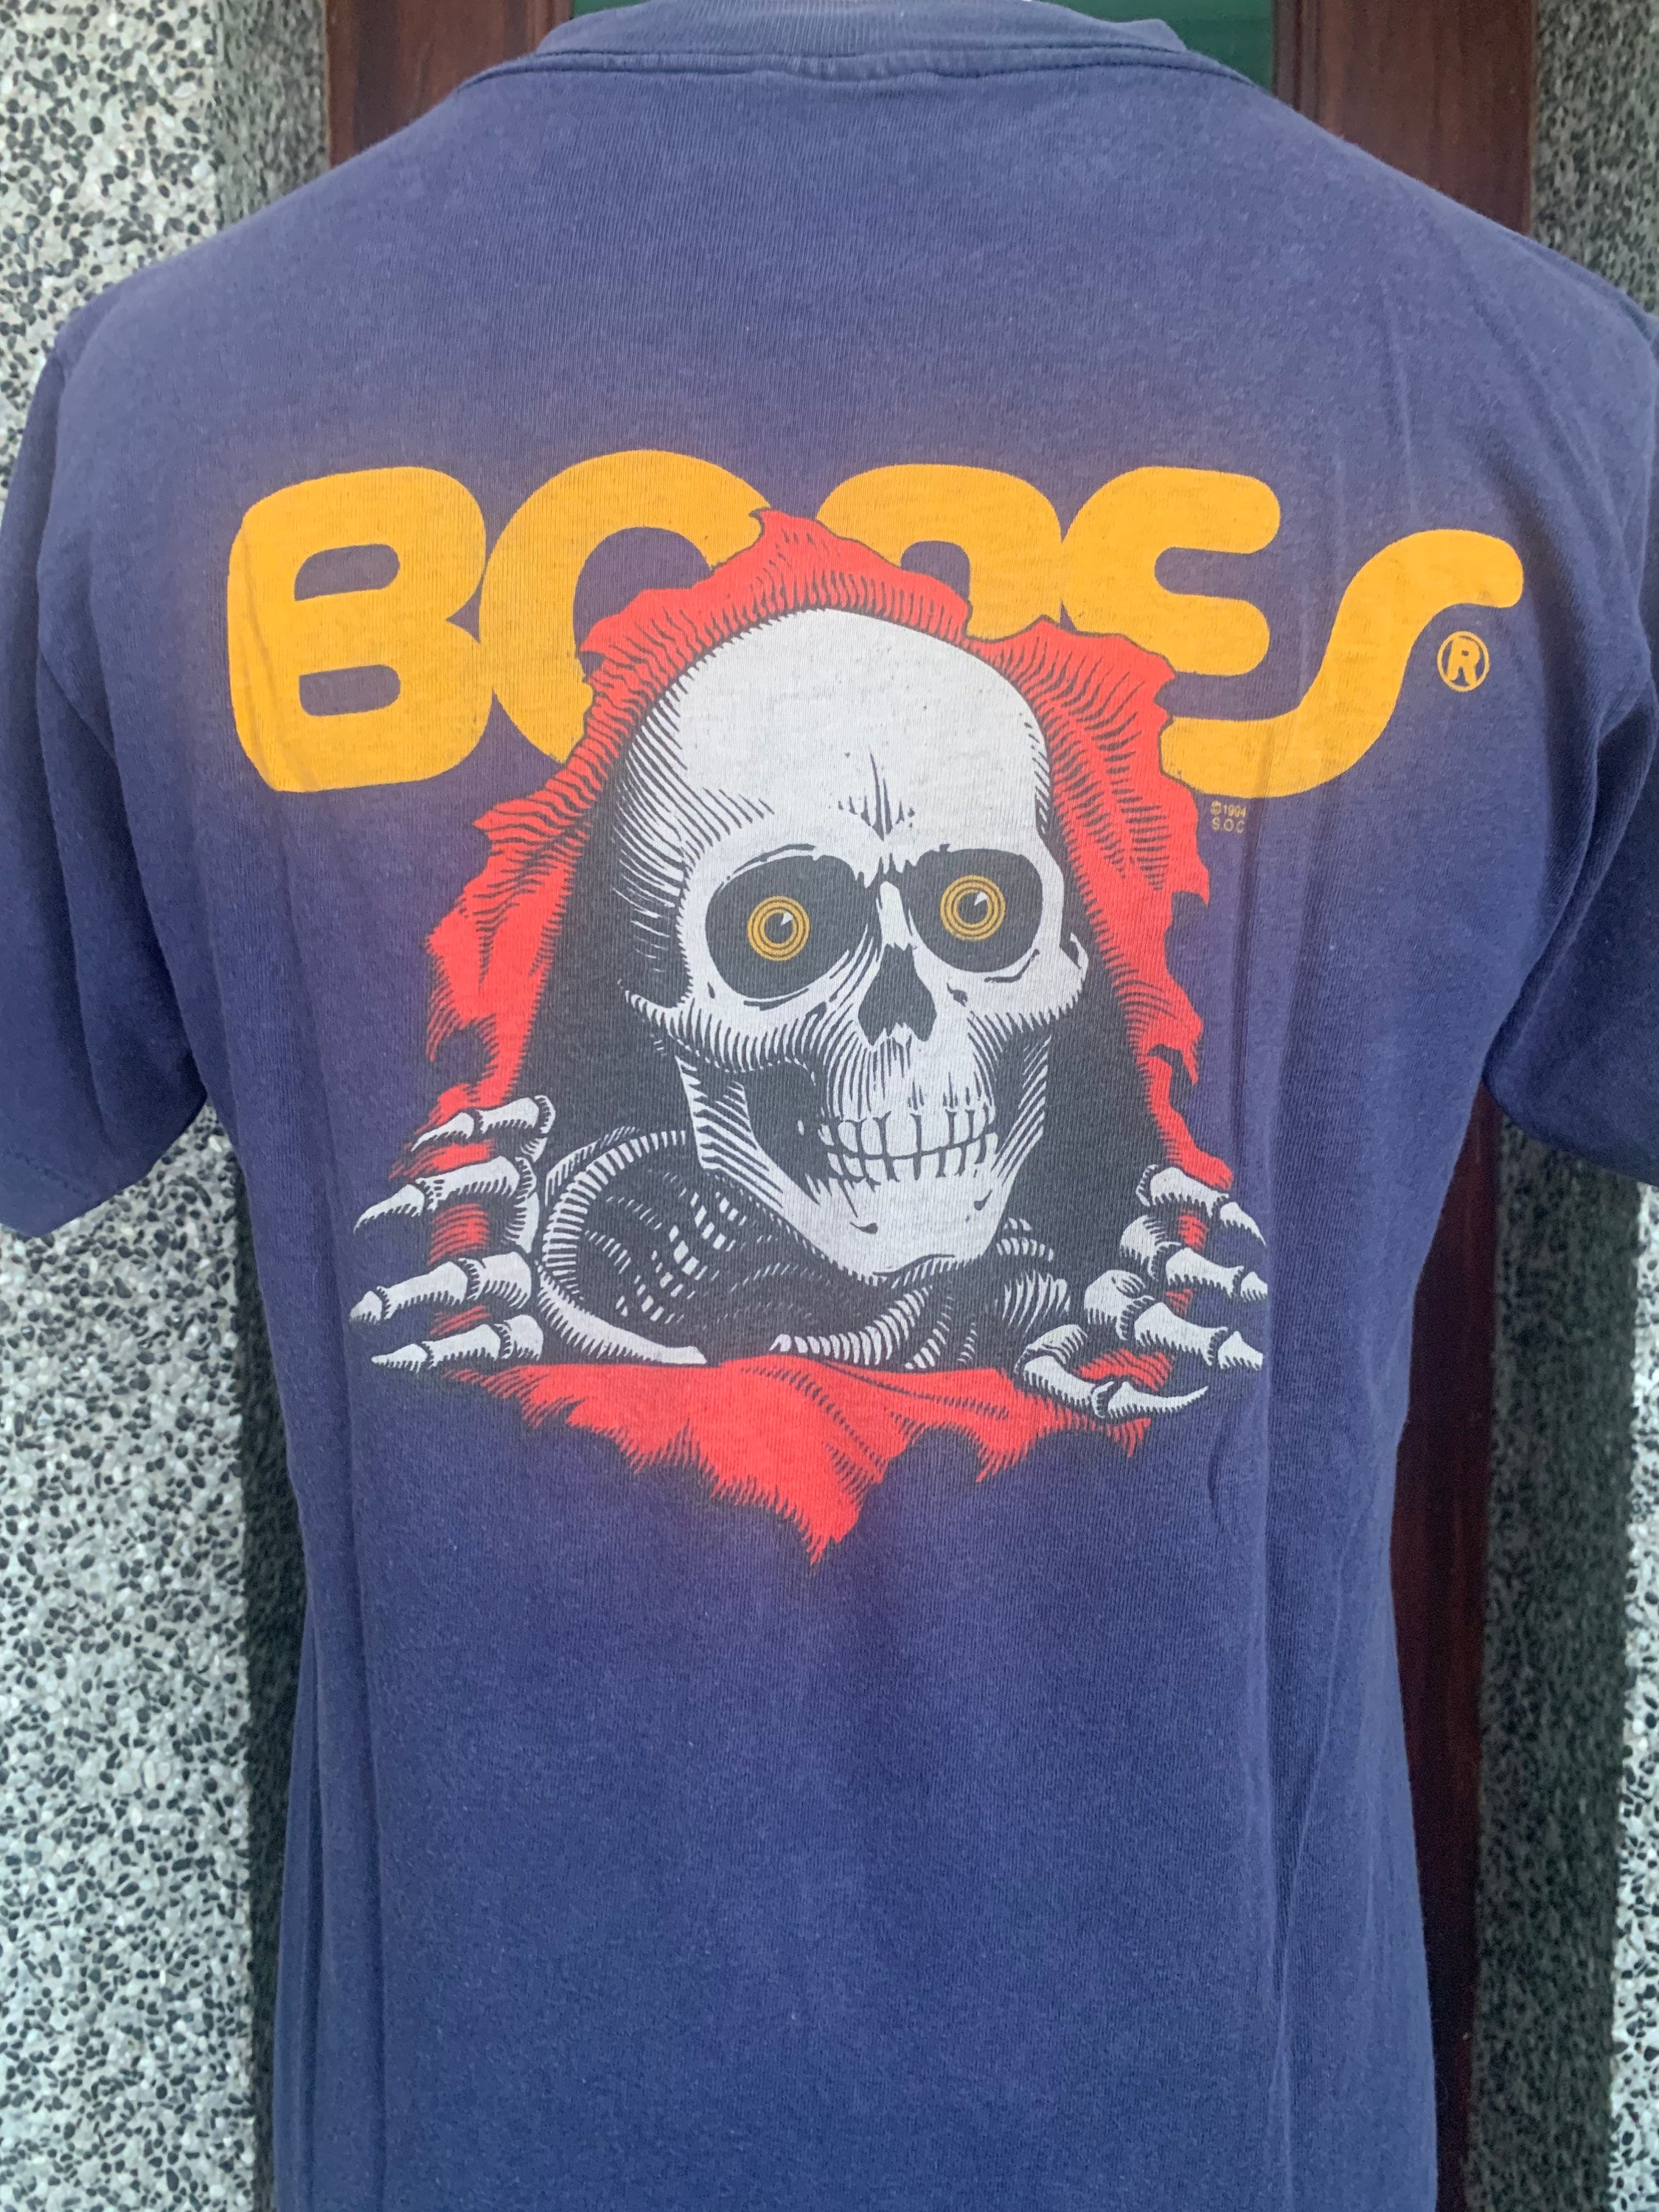 Vintage 1994 Powell Peralta Bones Skateboards T Shirt - Etsy